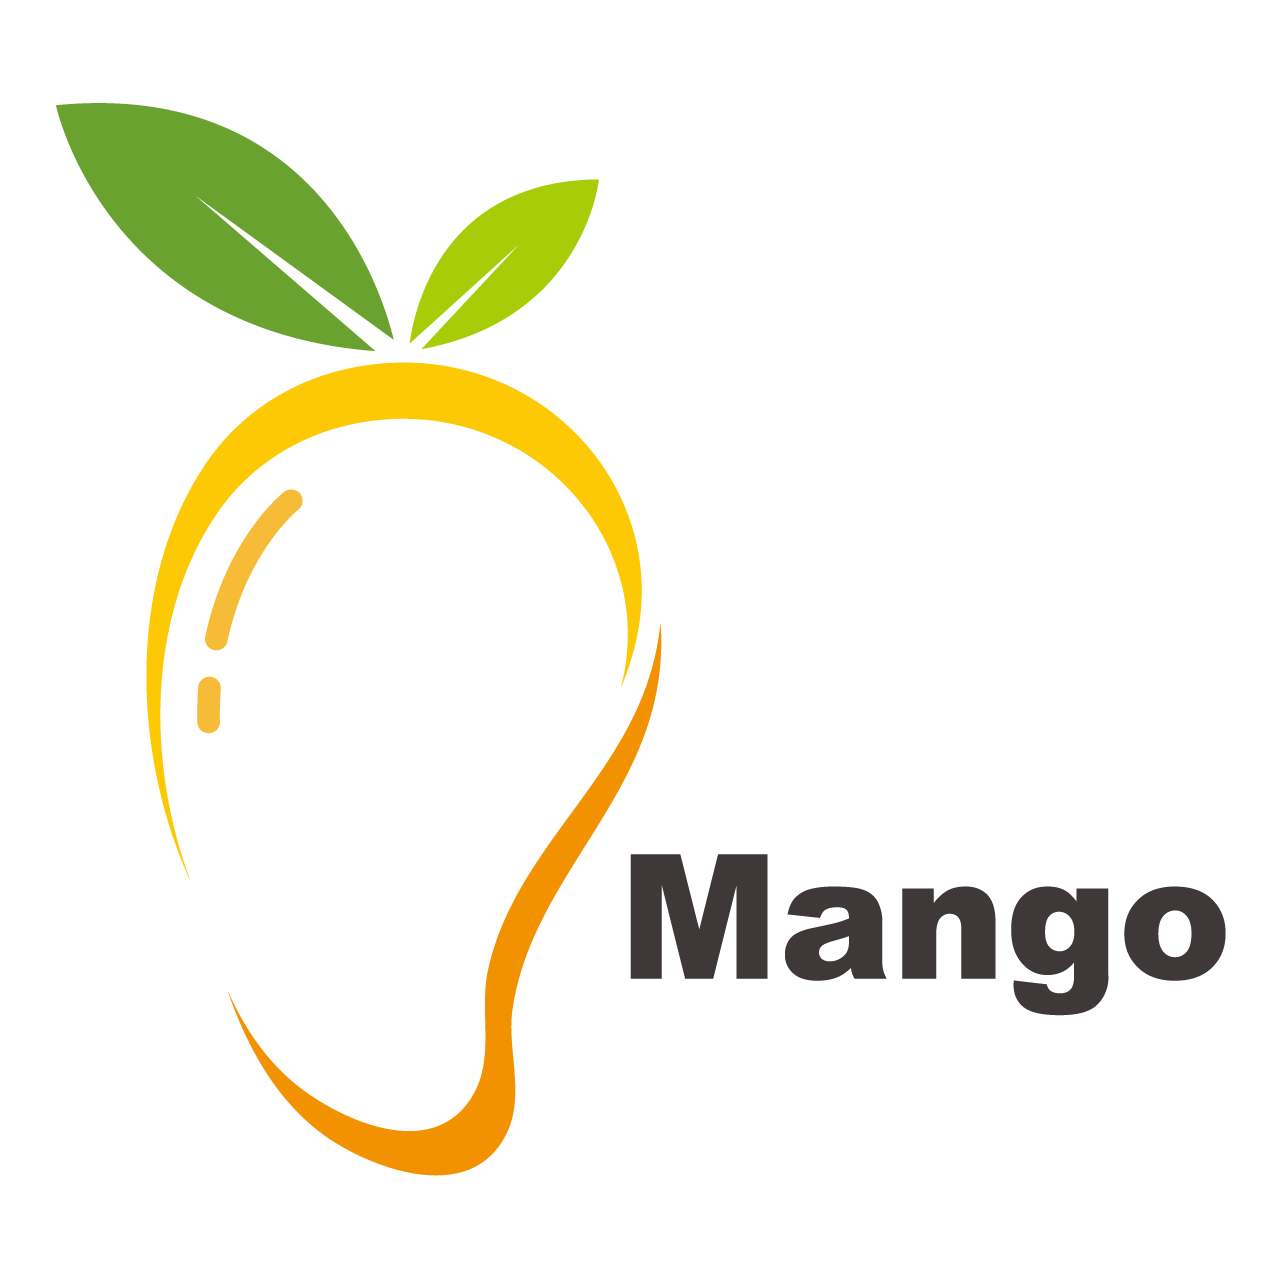 Mango fruit illustration design cartoon clipart